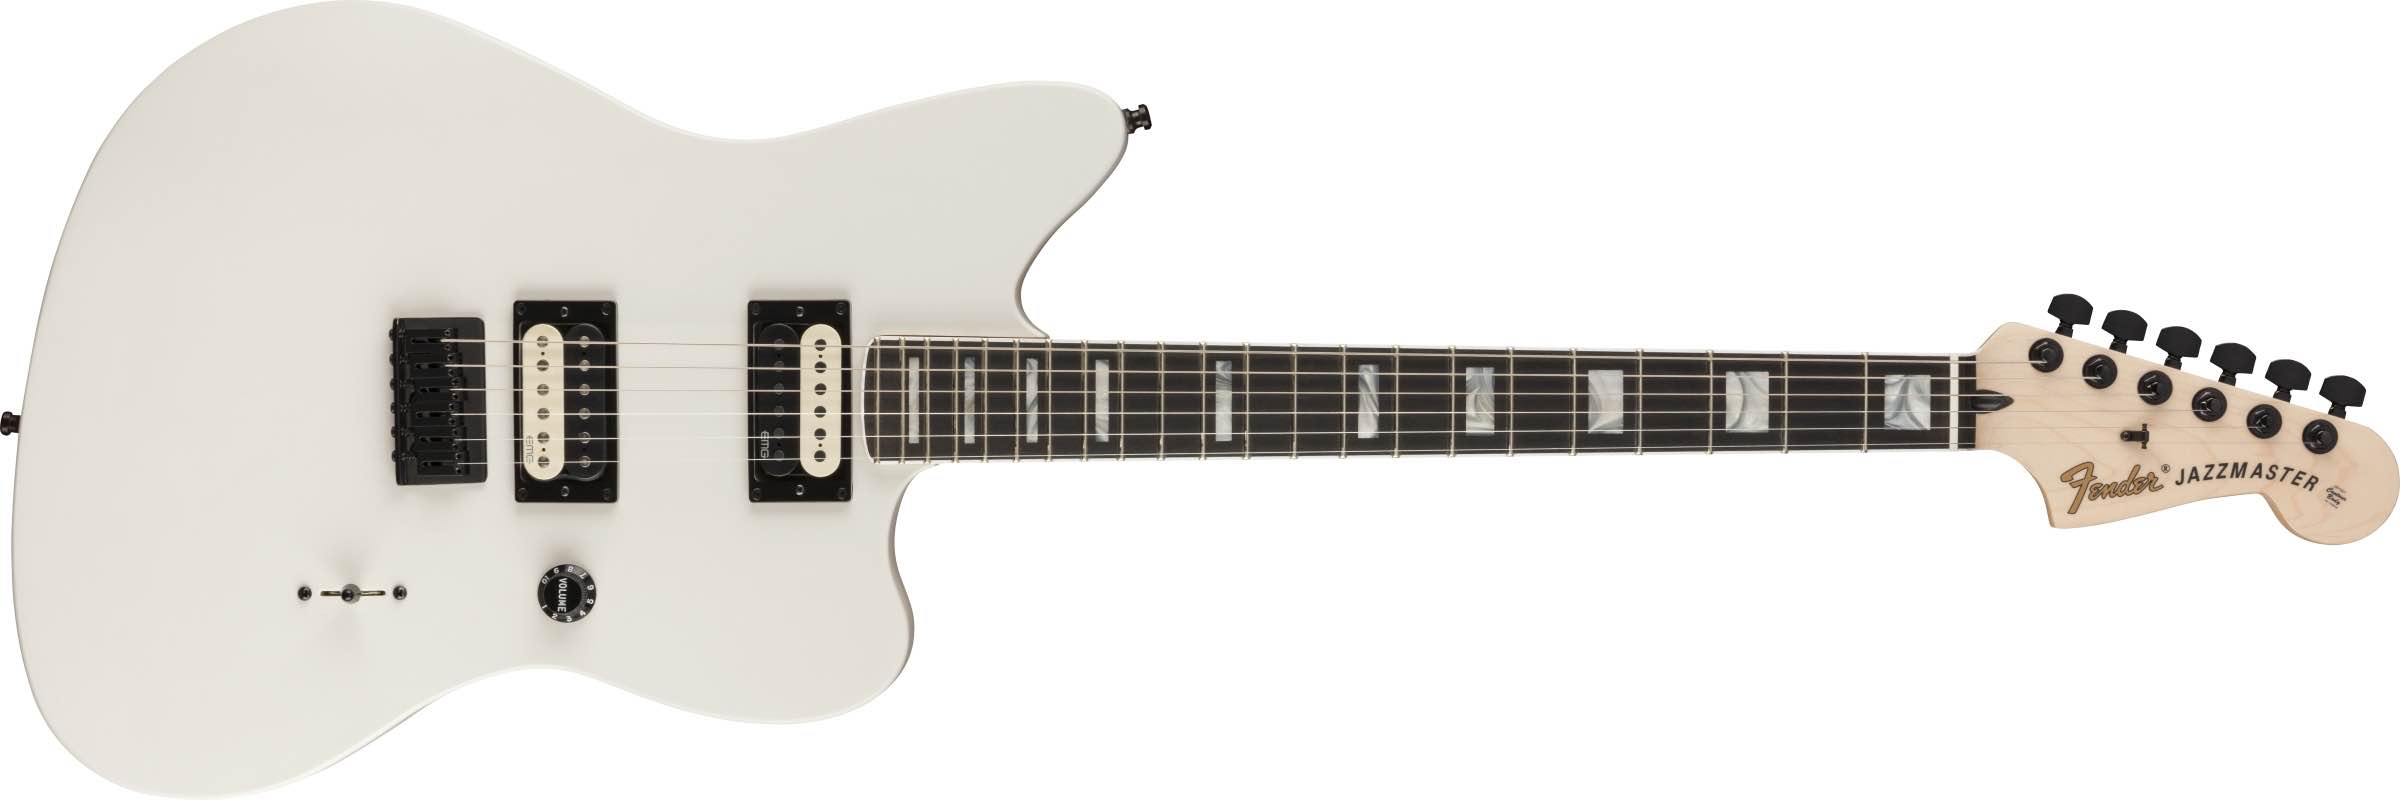 Fender Jim Root Jazzmaster V4 custom shop signature chitarra guitar slipknot strumenti musicali